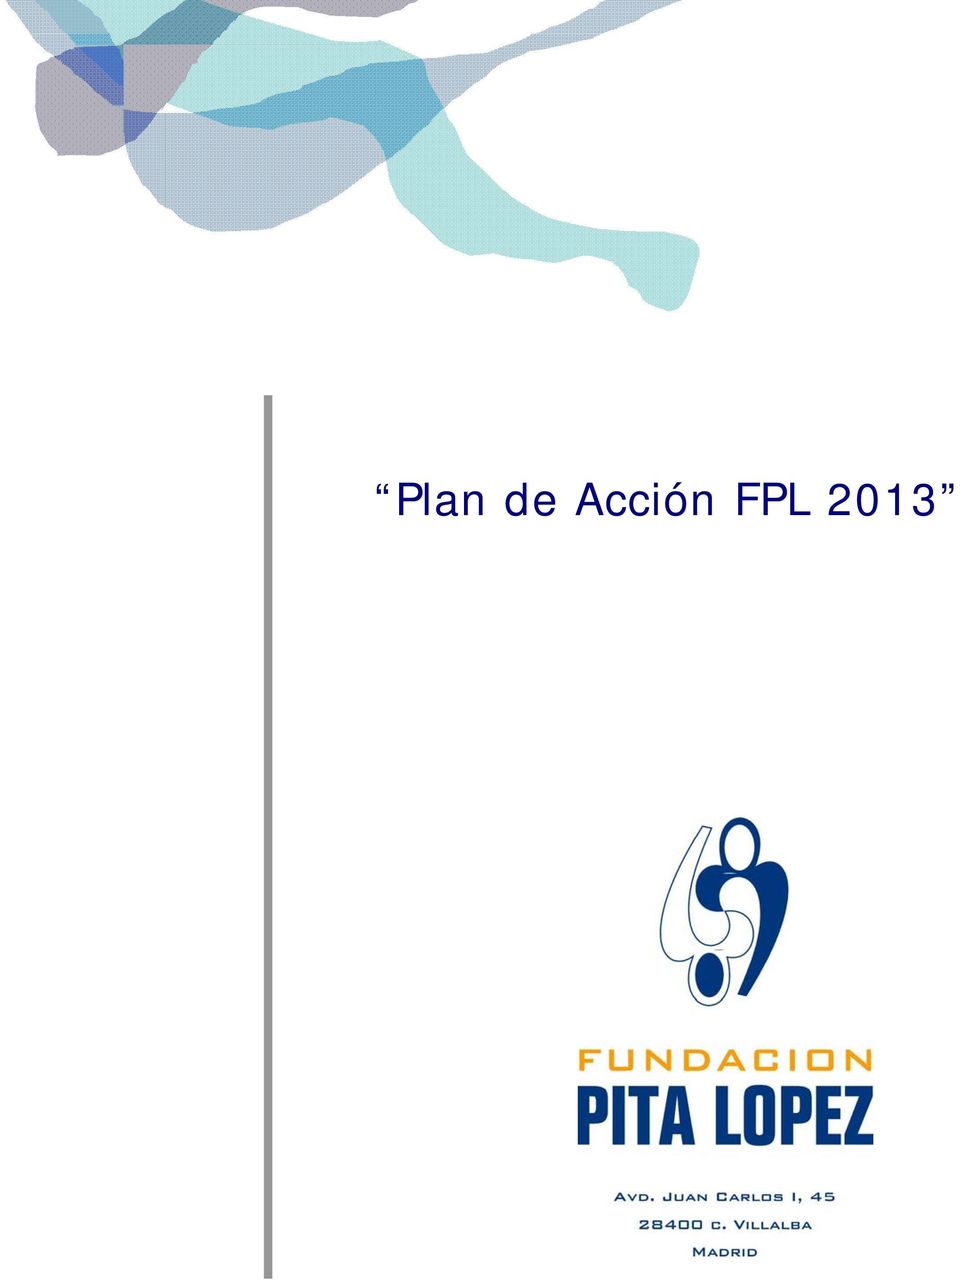 FPL 2013